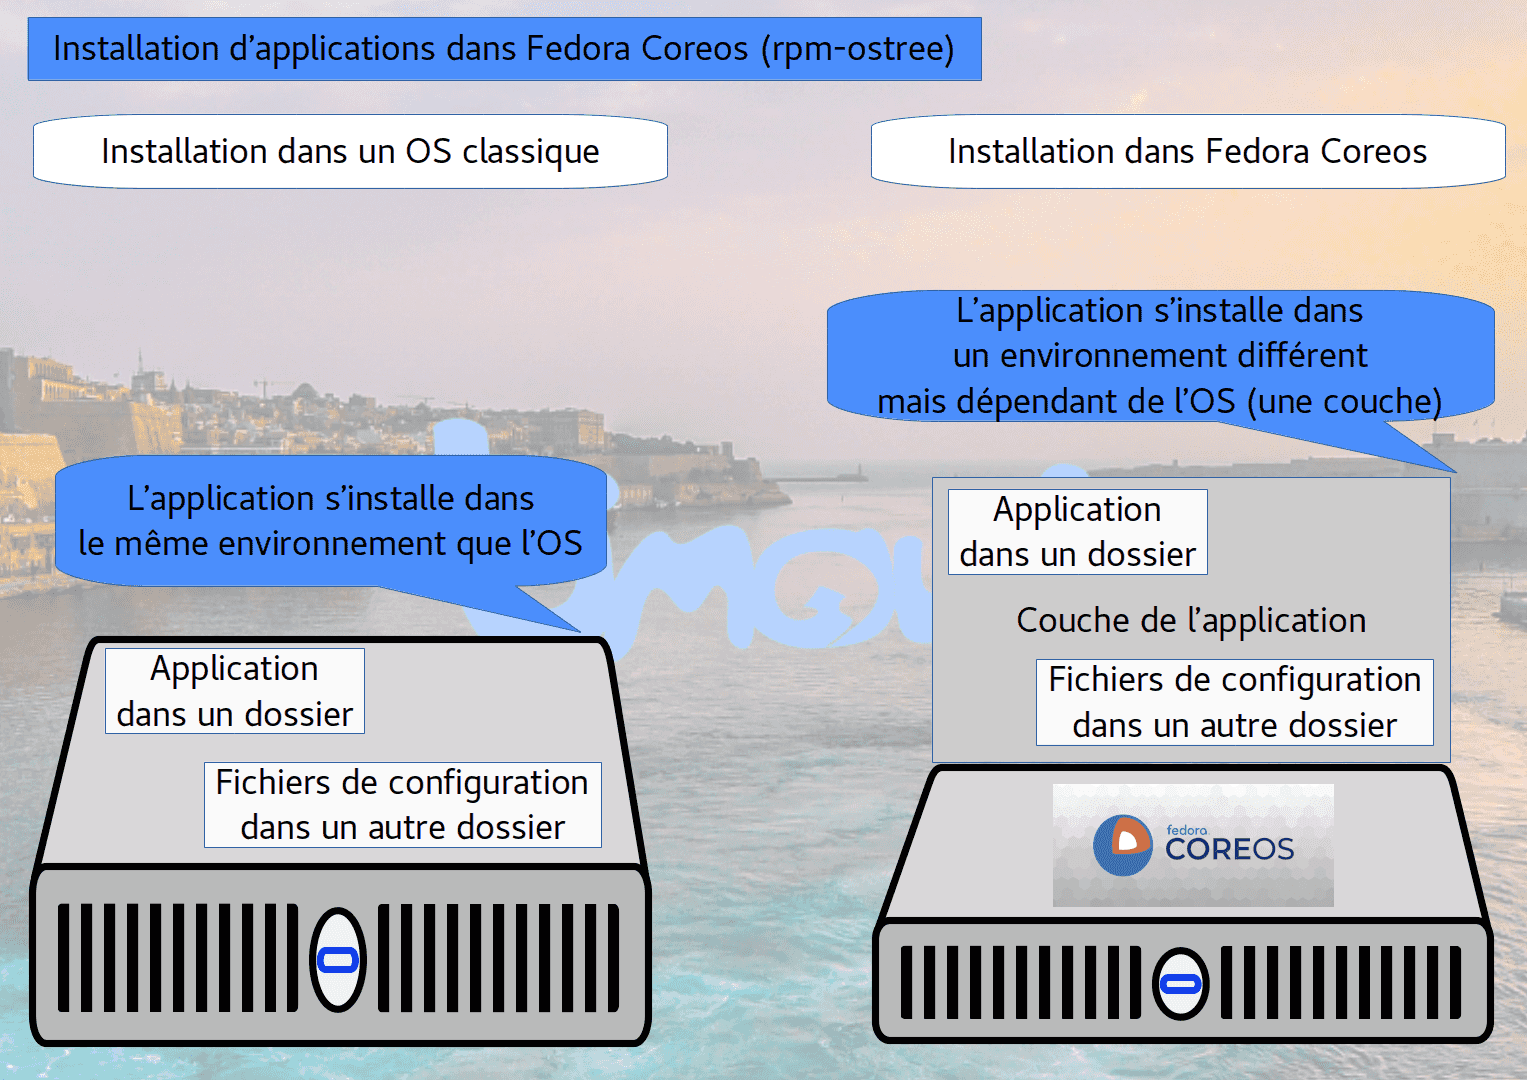 Installation d'applications dans Fedora Coreos (rpm-ostree).